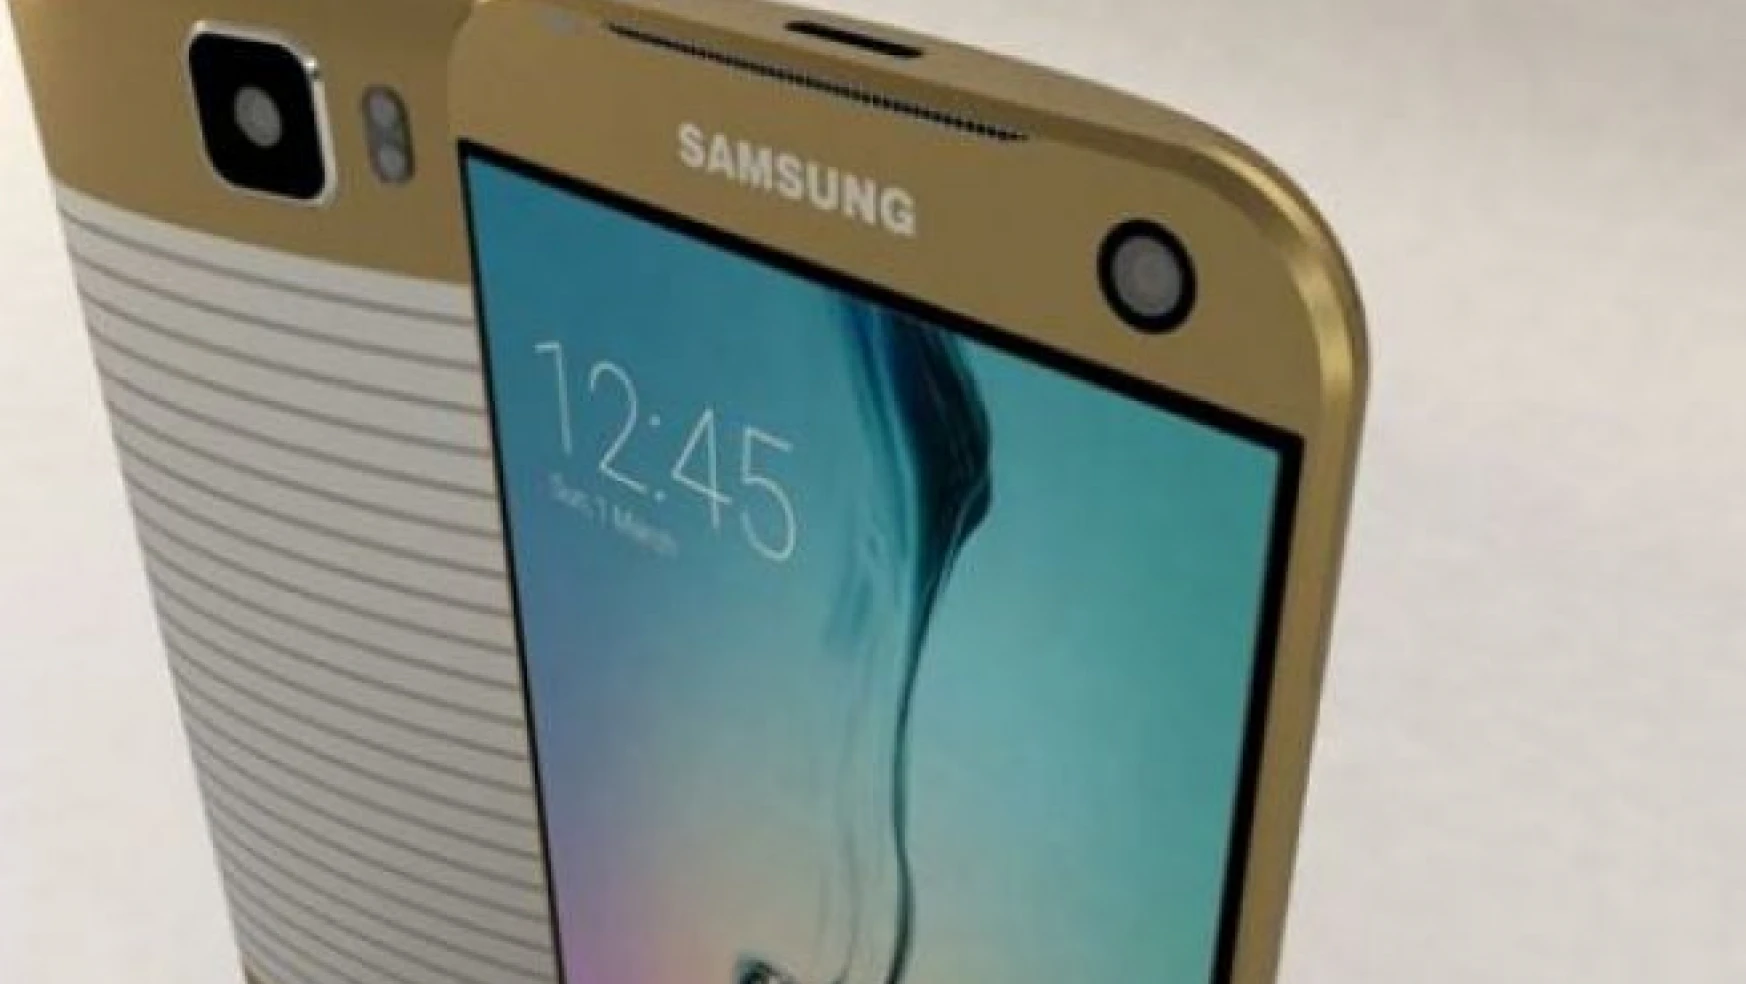 İşte Samsun Galaxy S7 ve Galaxy S7 Plus kılıfları!